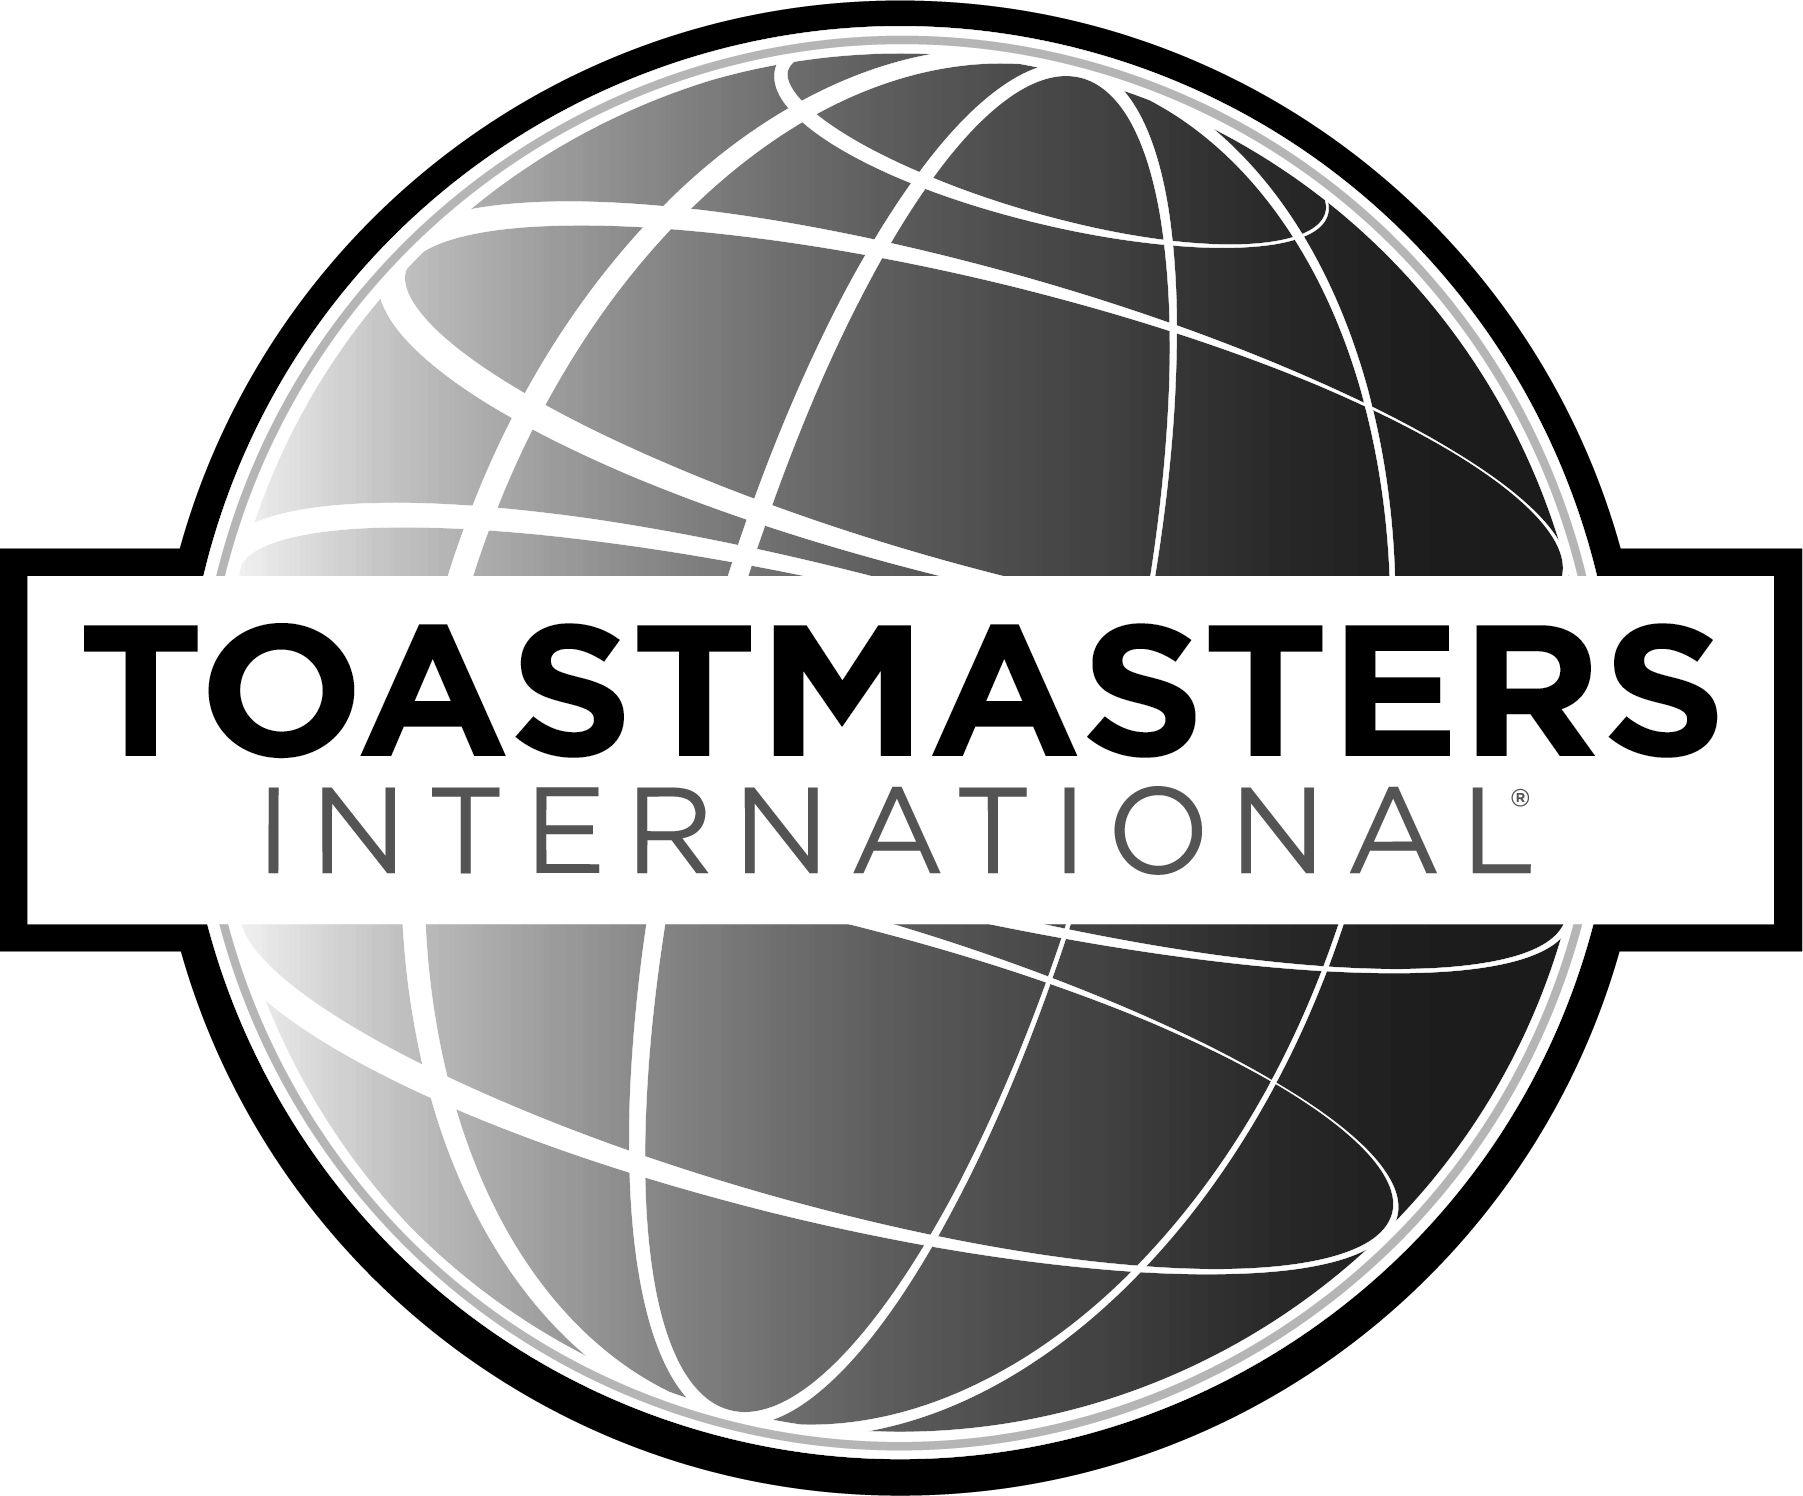 Black and White Logo - Toastmasters International -Logo and Design Elements